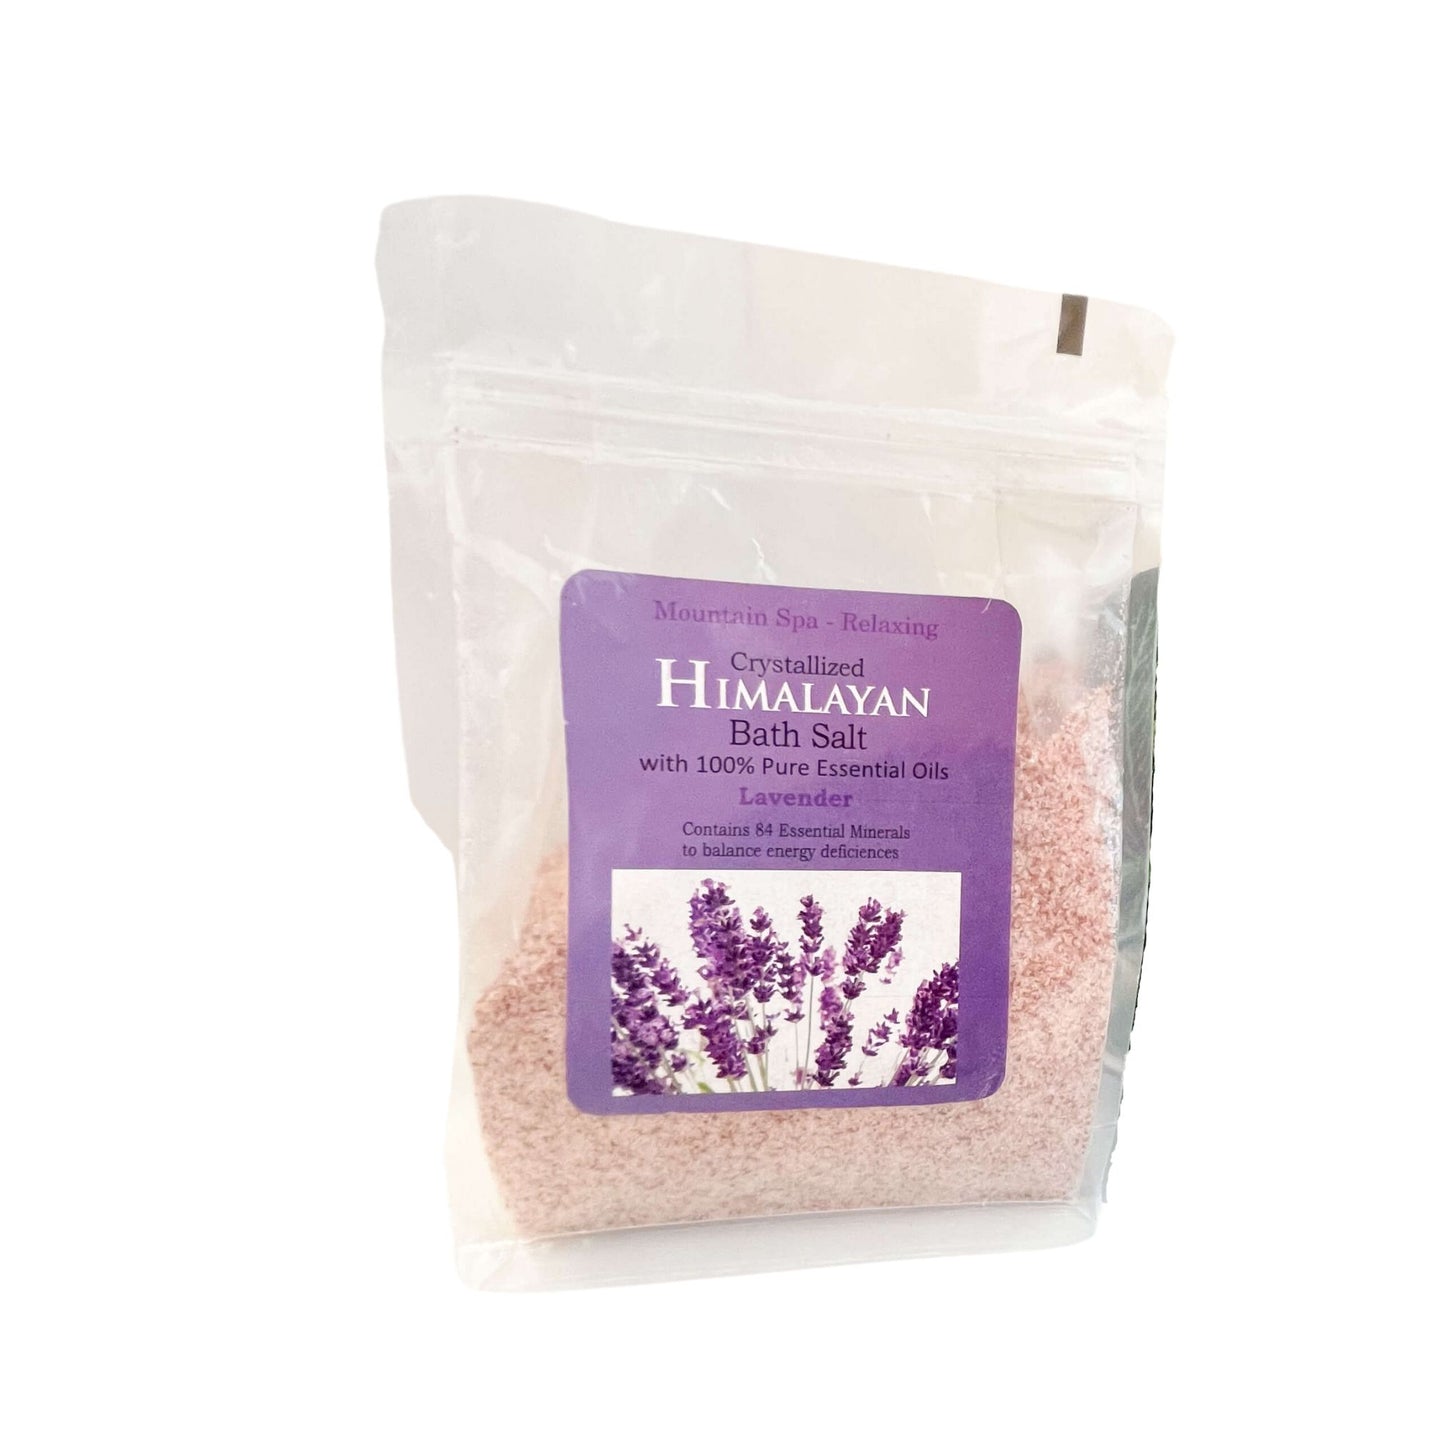 A bag of lavender bath salts.